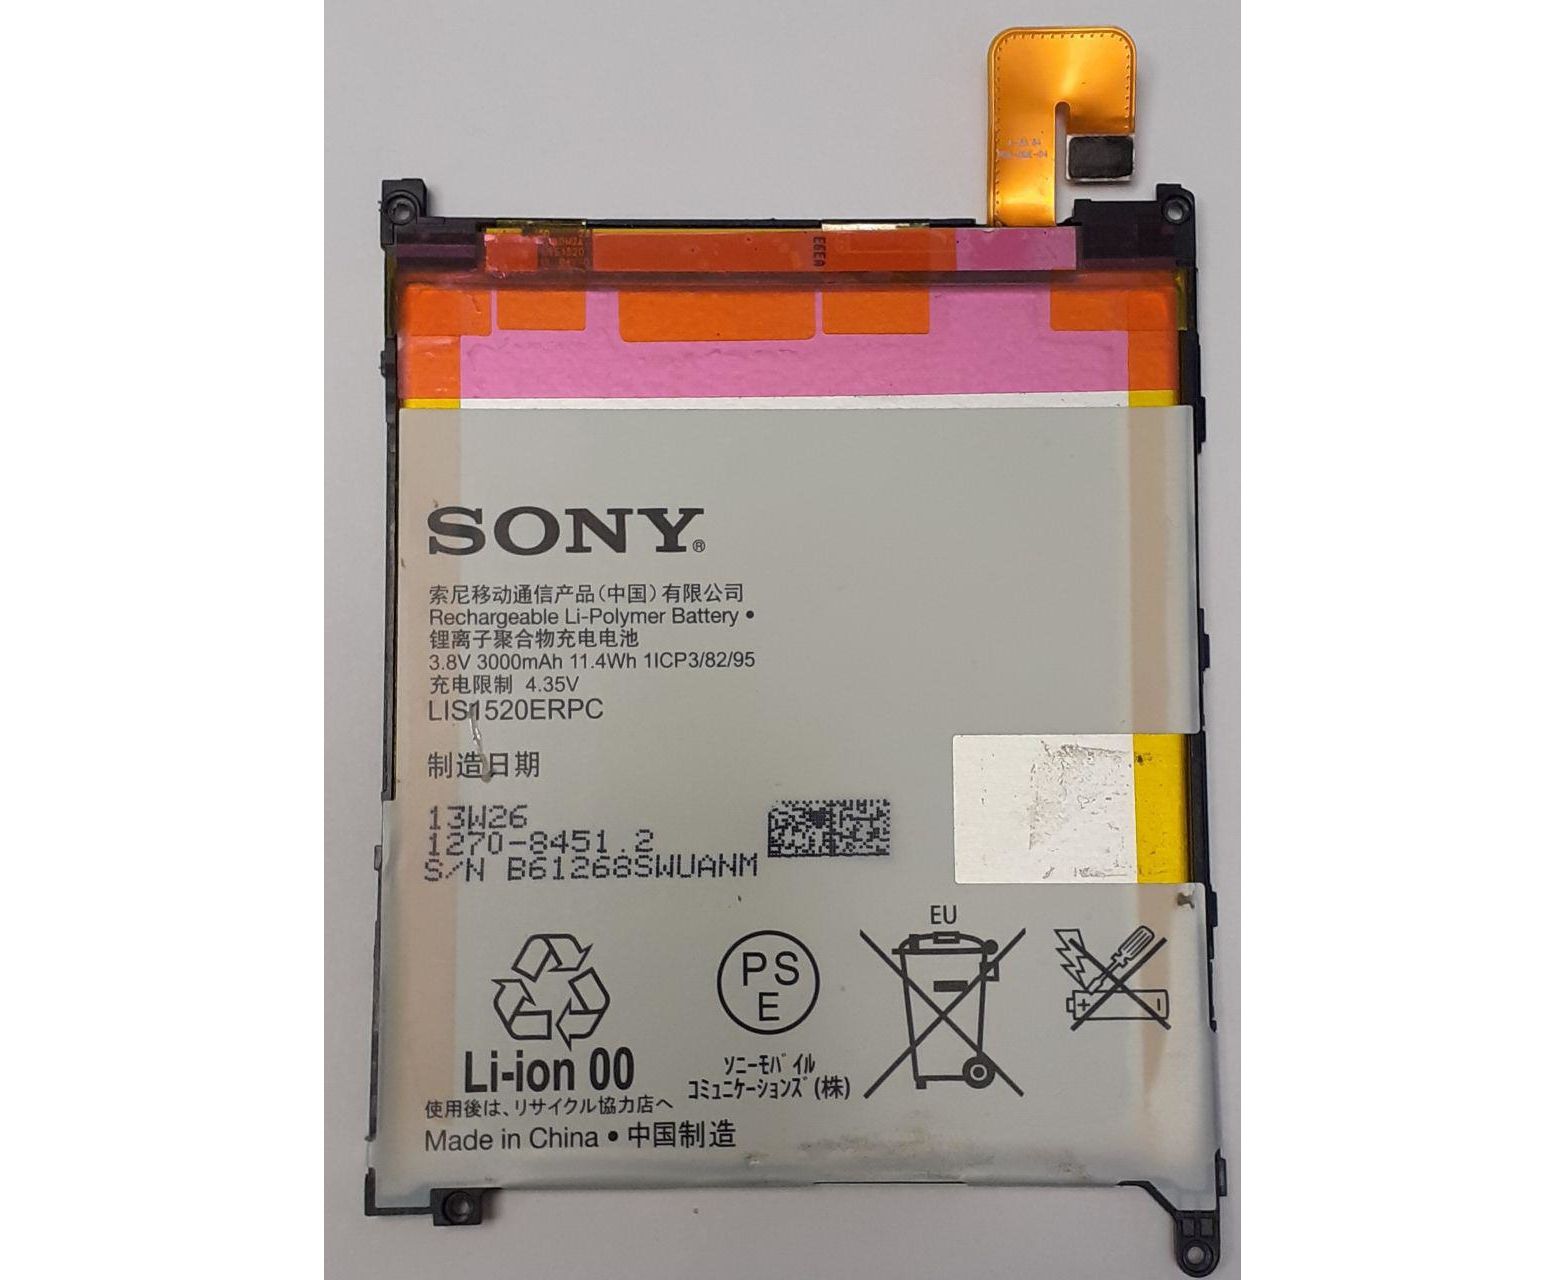 Sony xperia аккумулятор купить